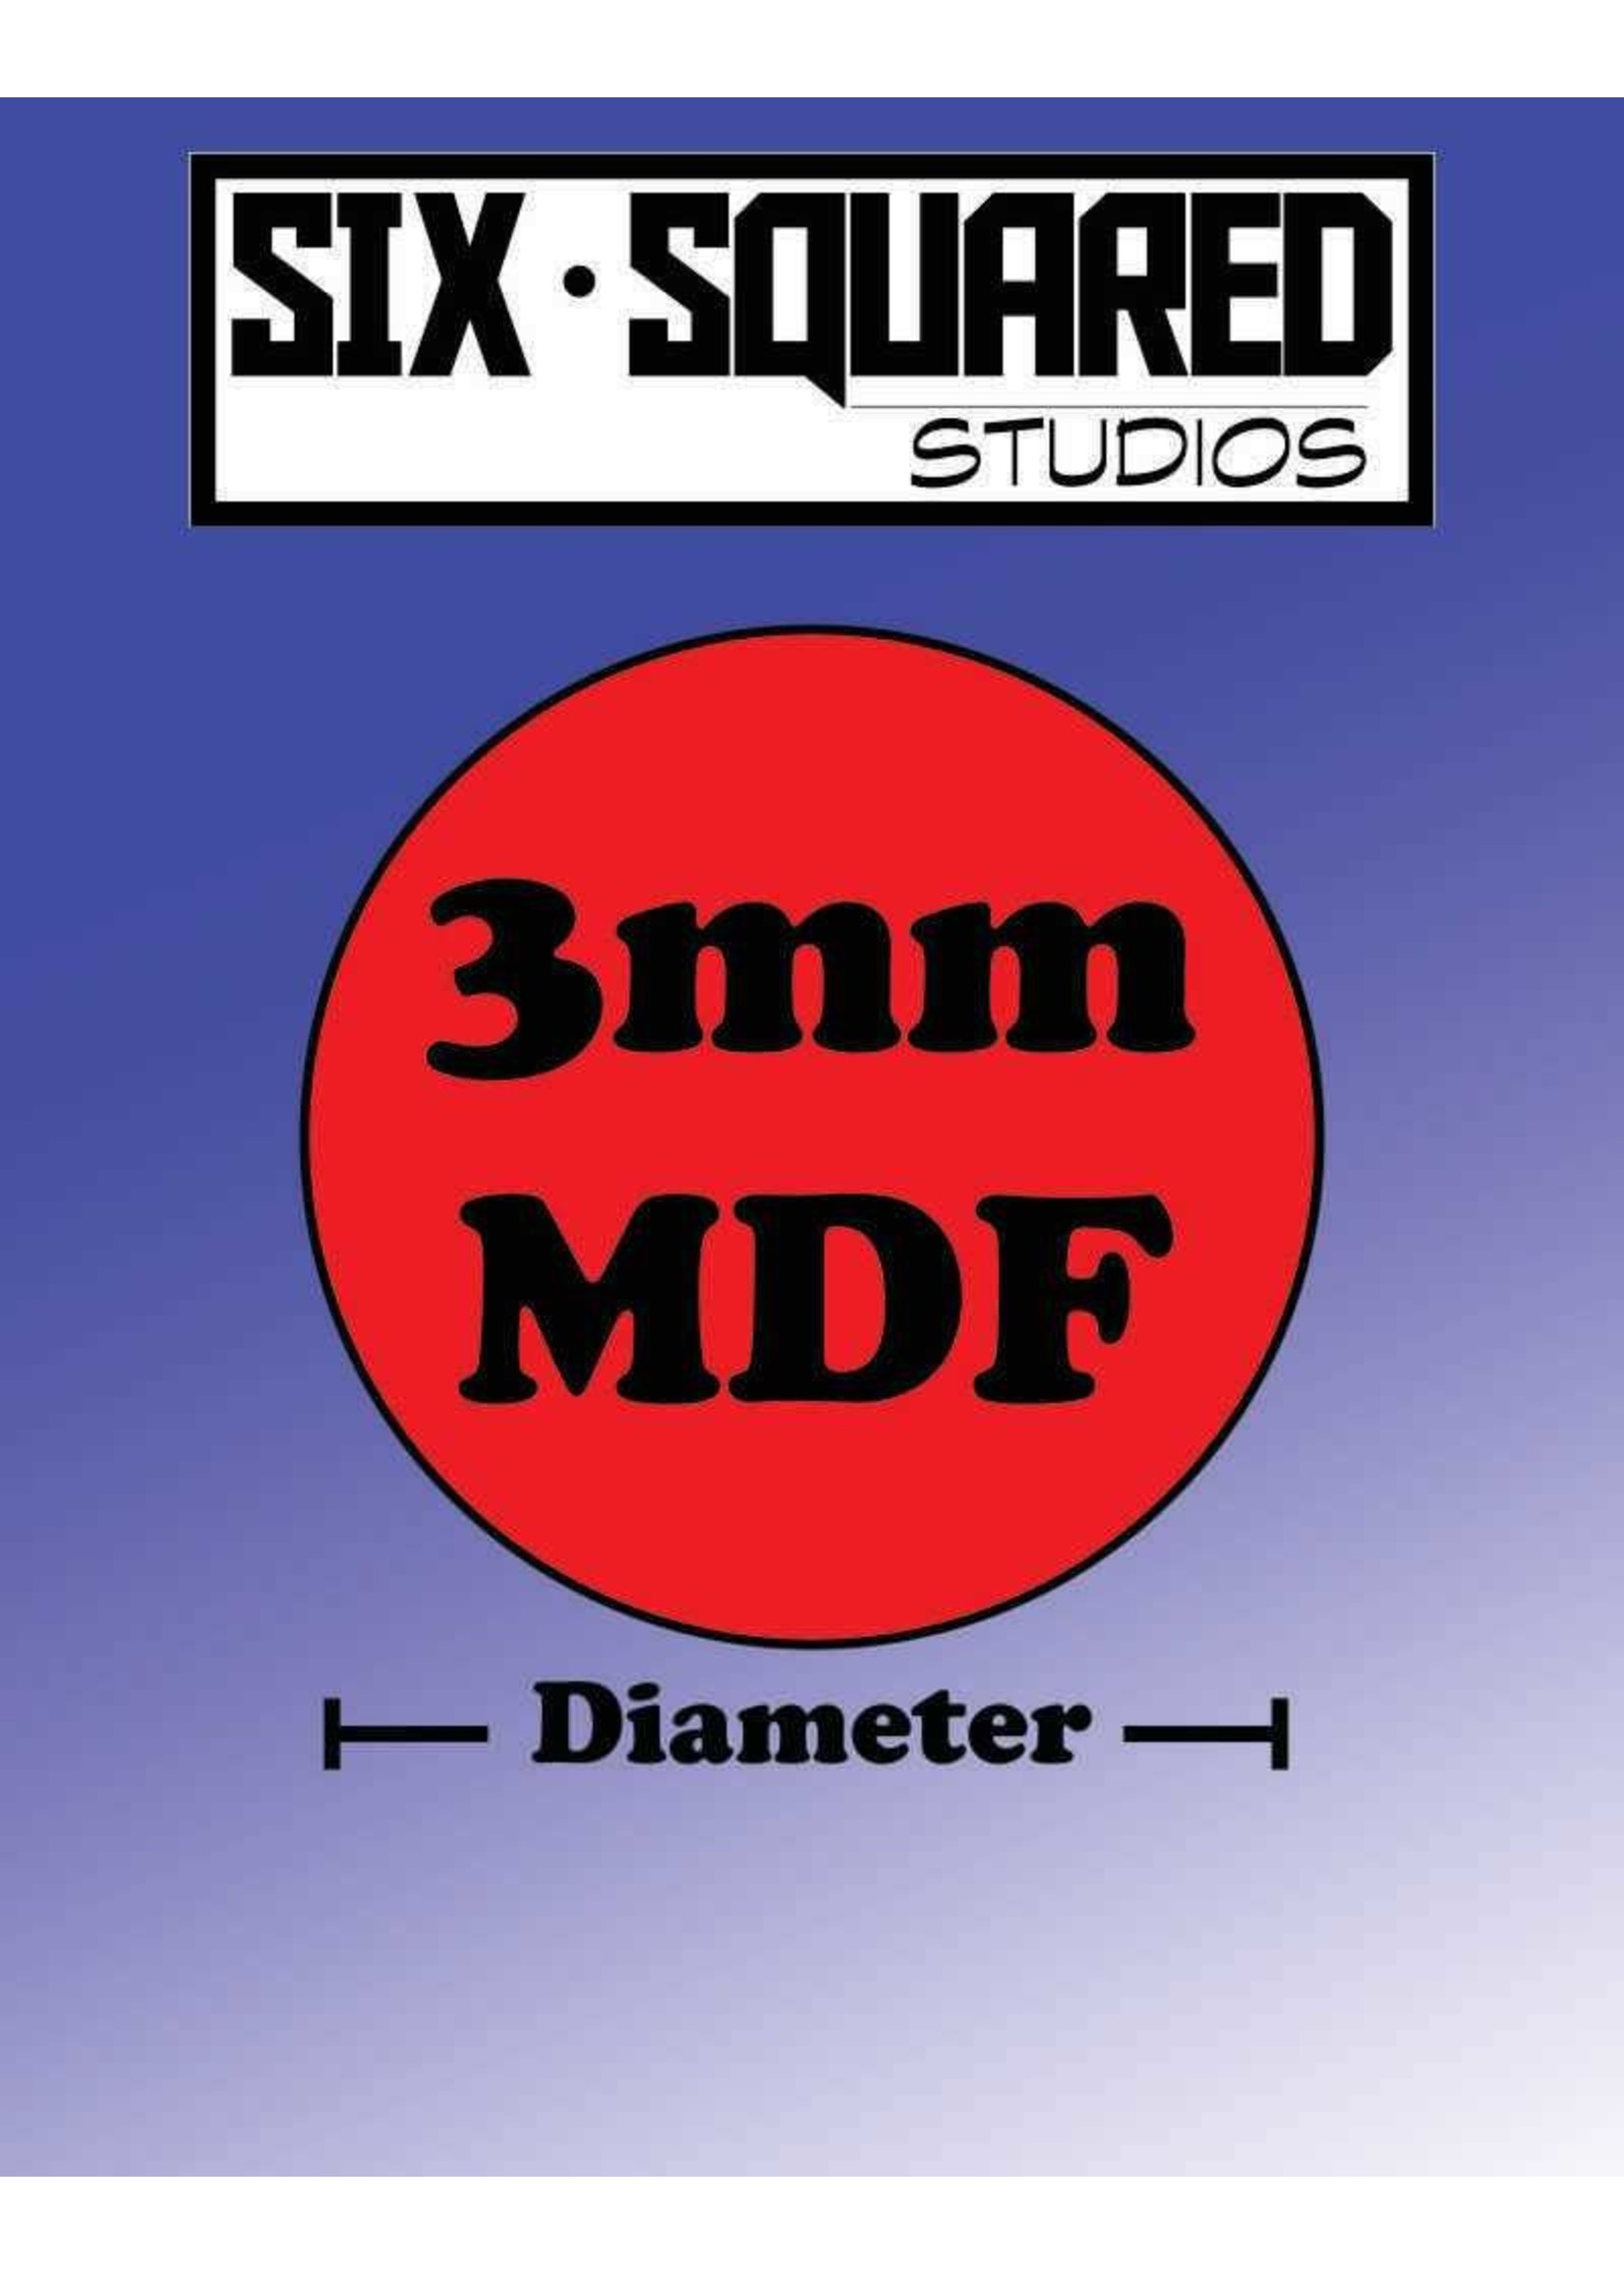 6 Squared Studios 25mm MDF round bases